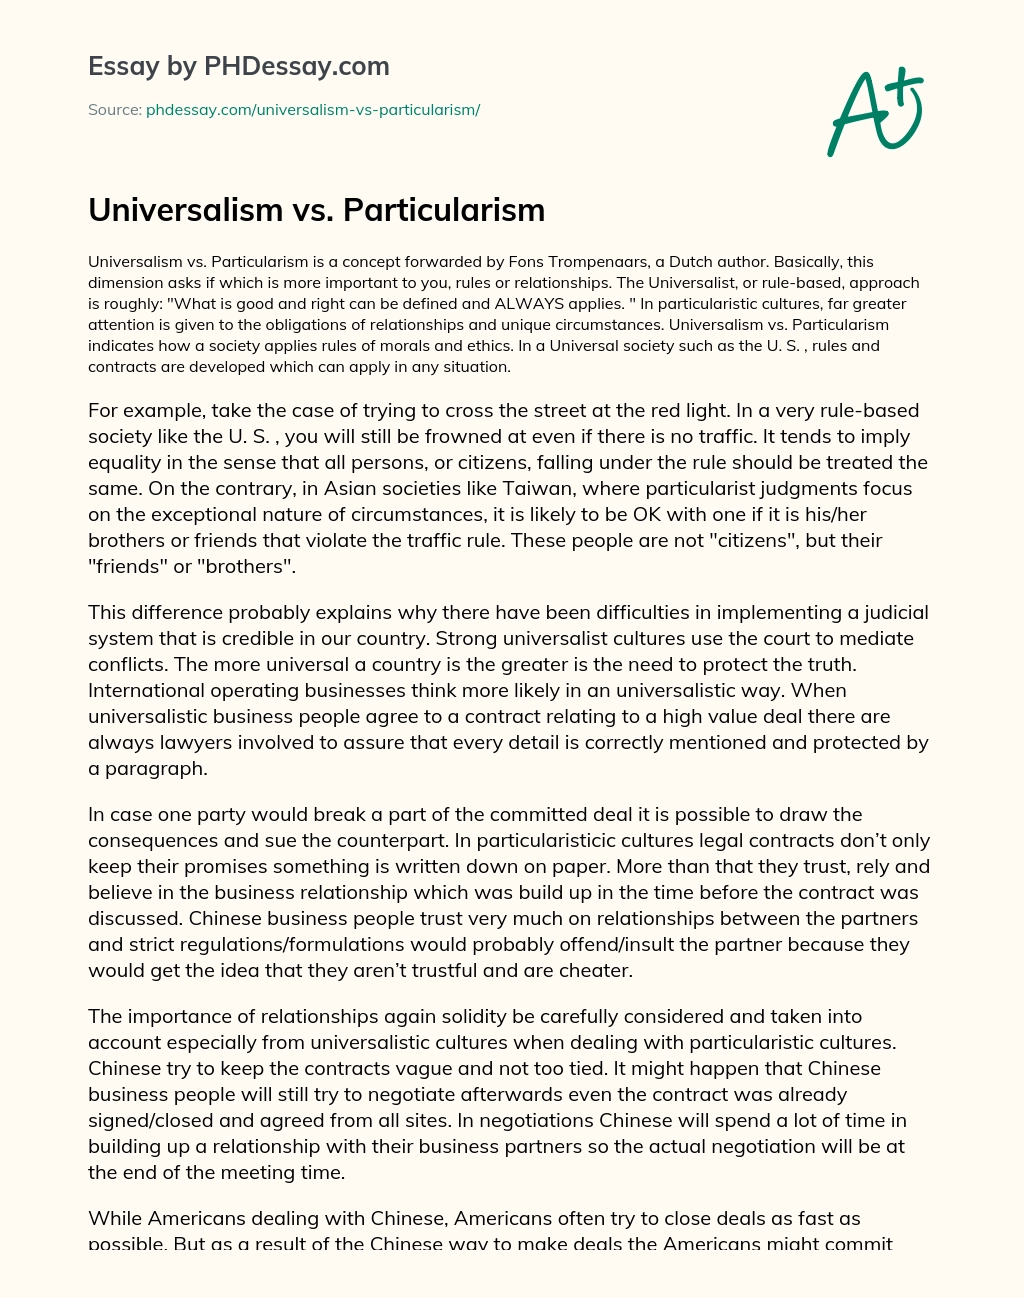 Universalism vs. Particularism essay